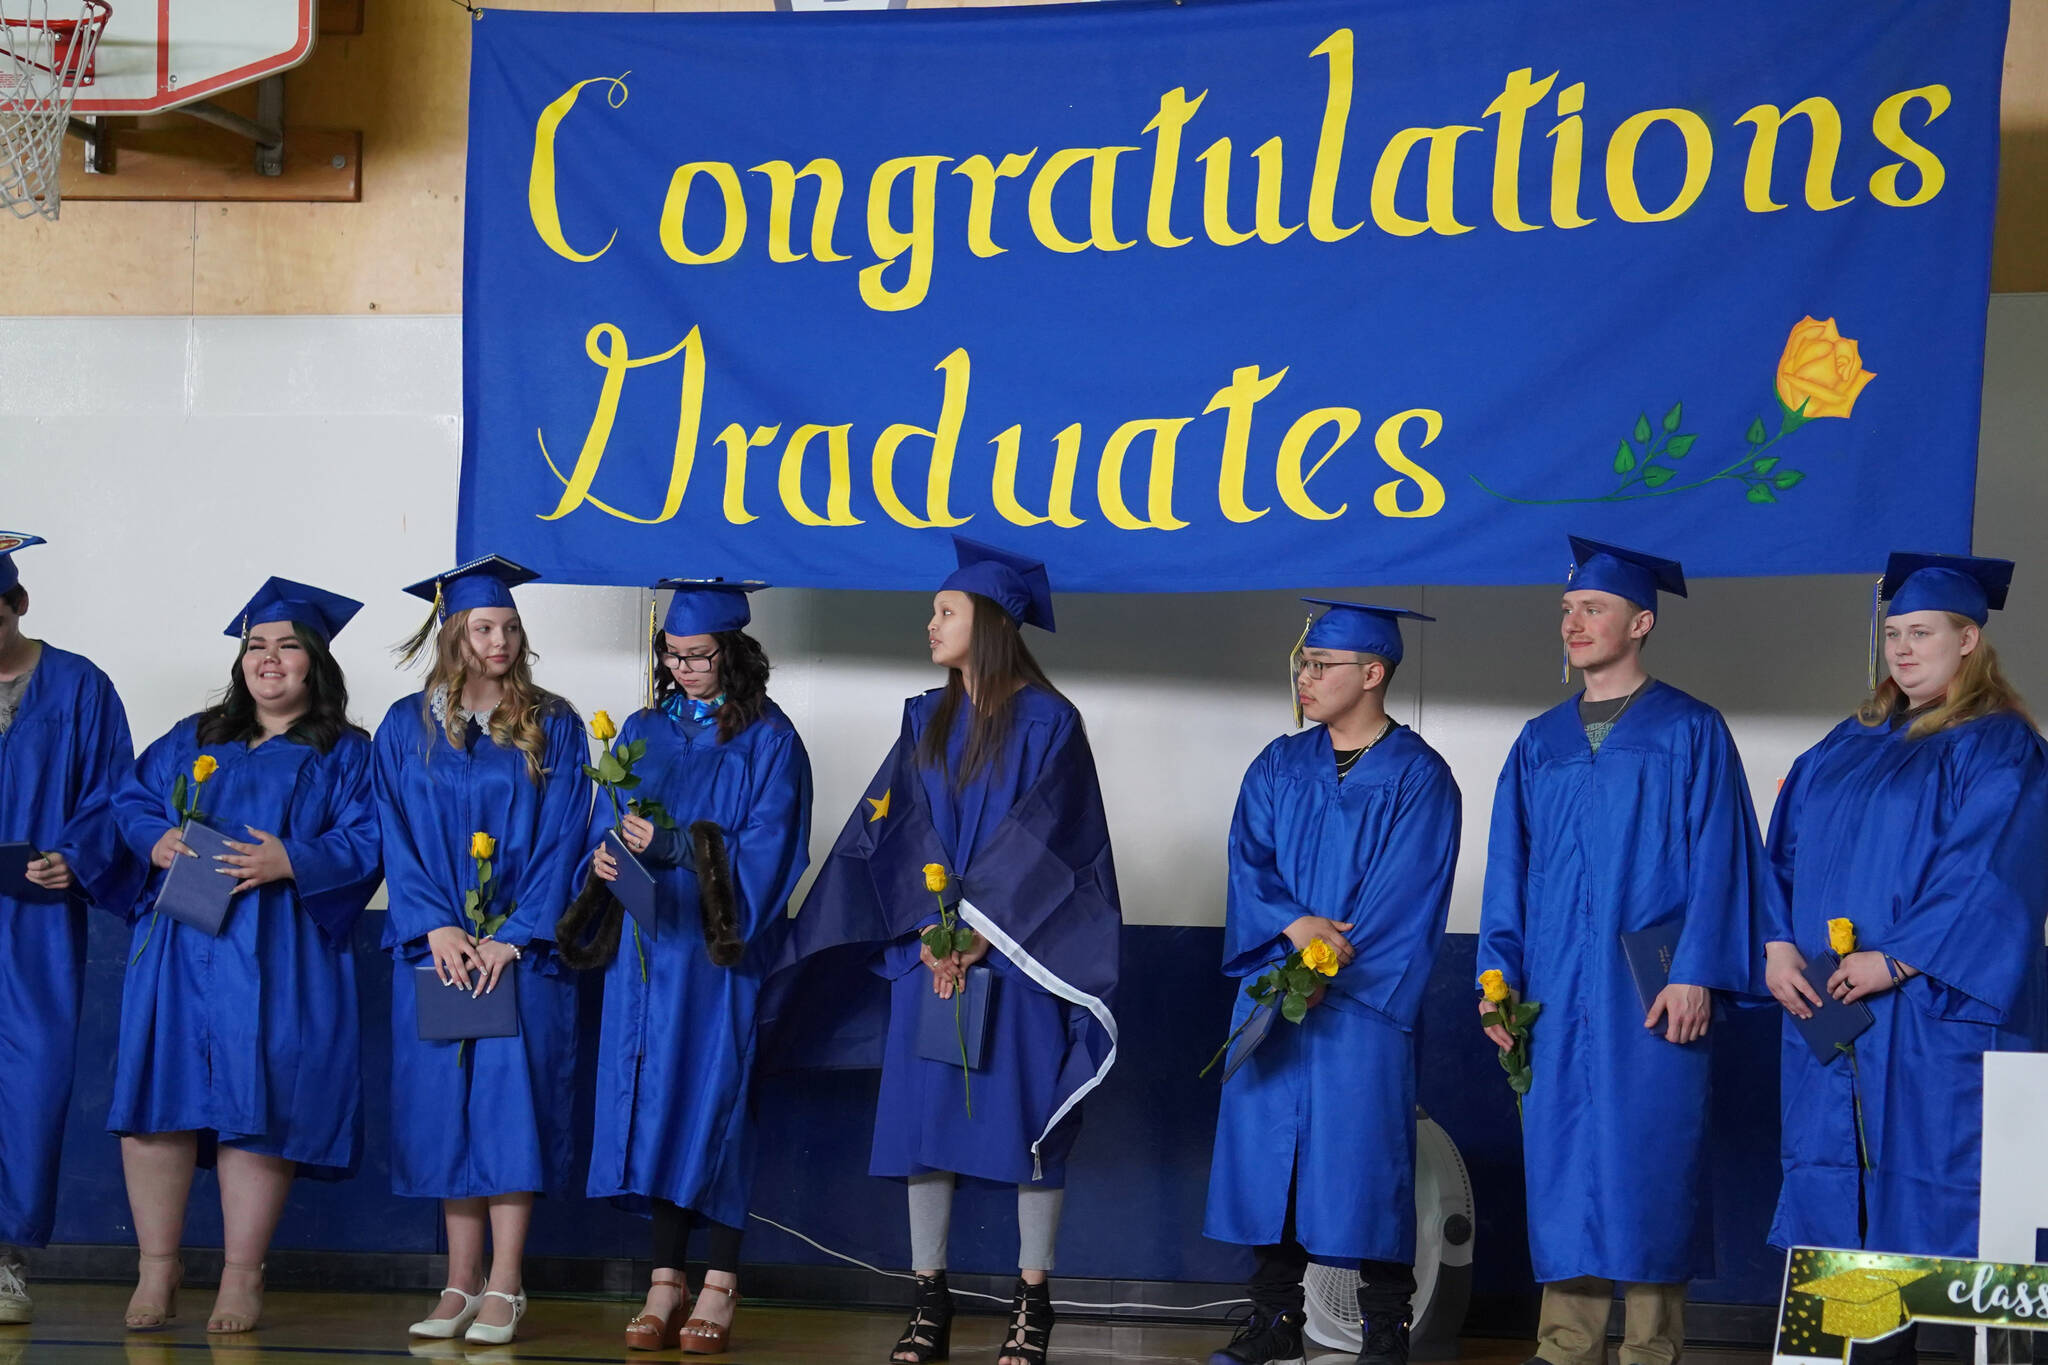 Kenai Alternative High School graduates celebrate receiving their diplomas during a graduation ceremony on Monday, May 15, 2023, at Kenai Alternative High School in Kenai, Alaska. (Jake Dye/Peninsula Clarion)